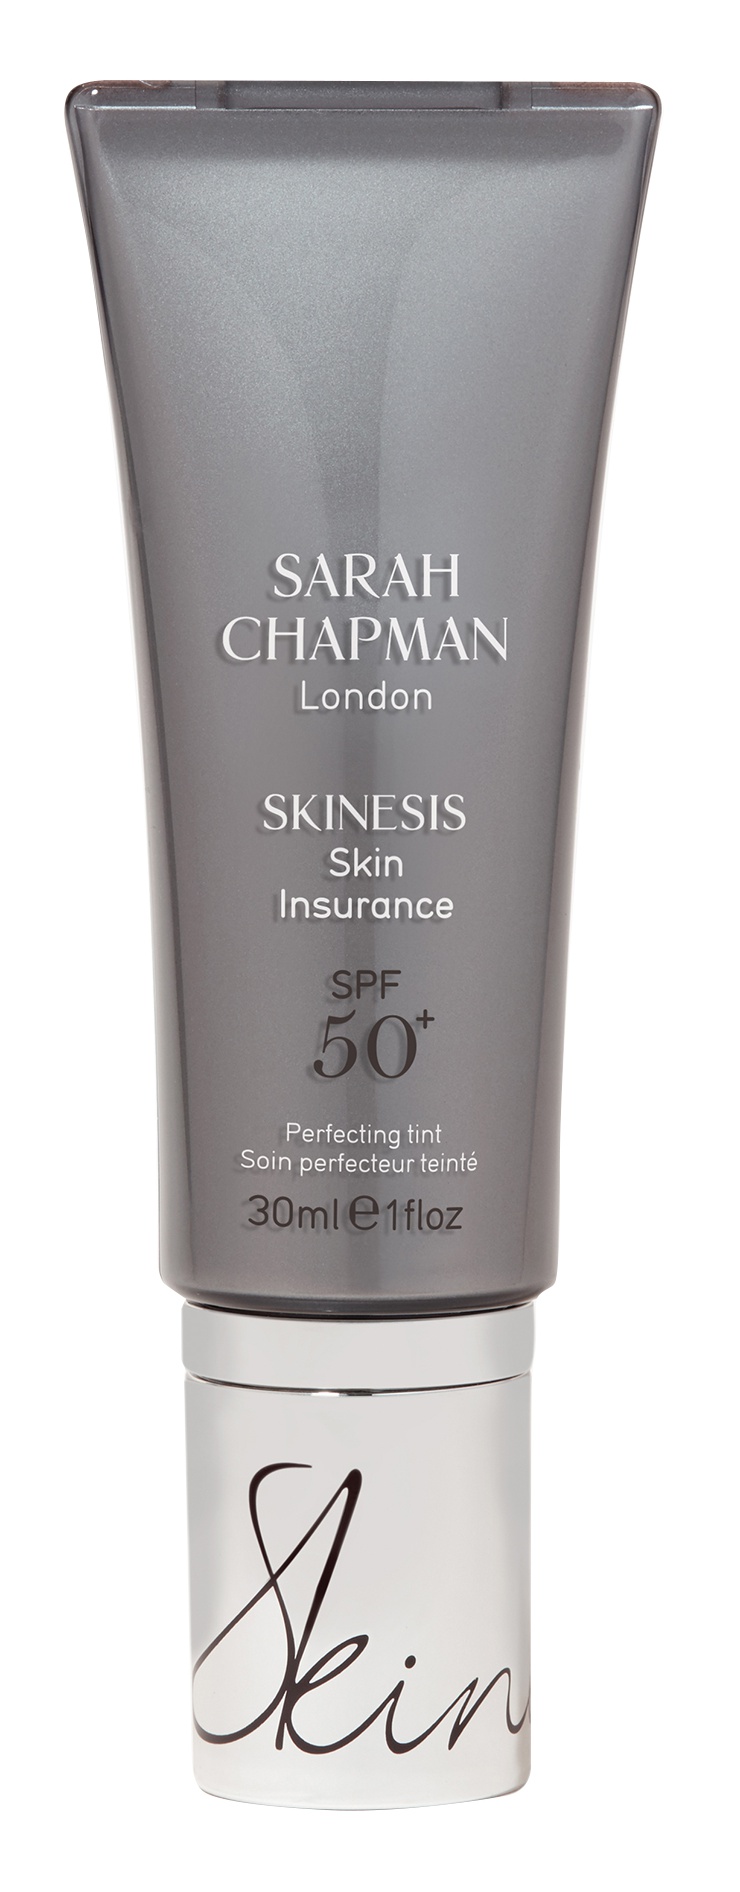 Sarah Chapman Skin Insurance Spf 50+